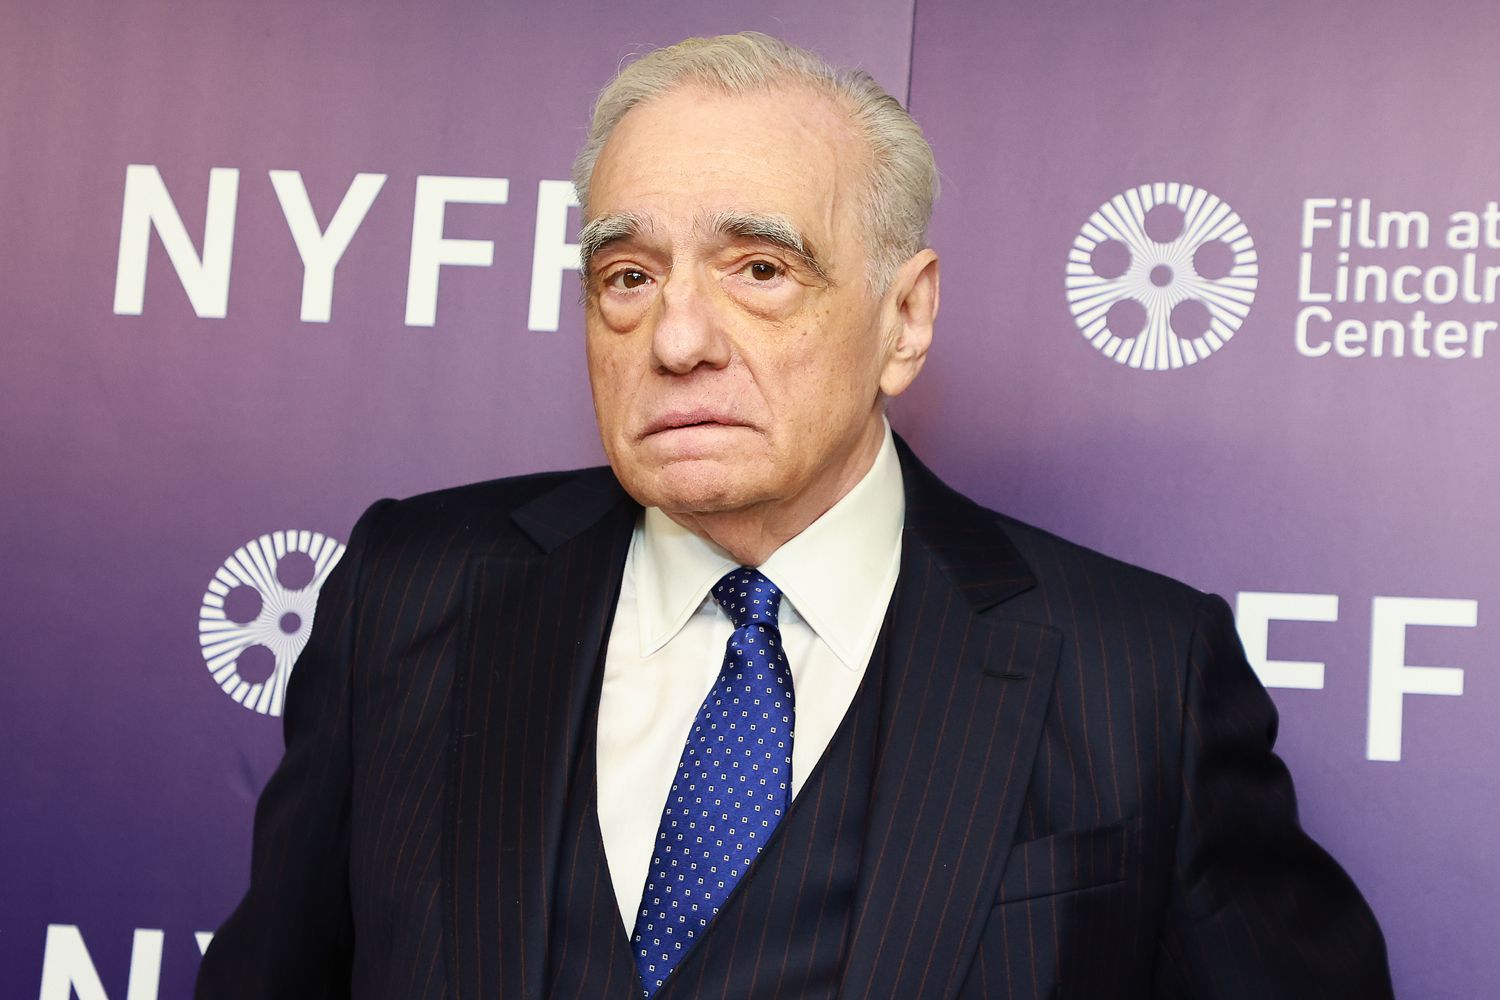 Martin Scorsese wearing a black suit